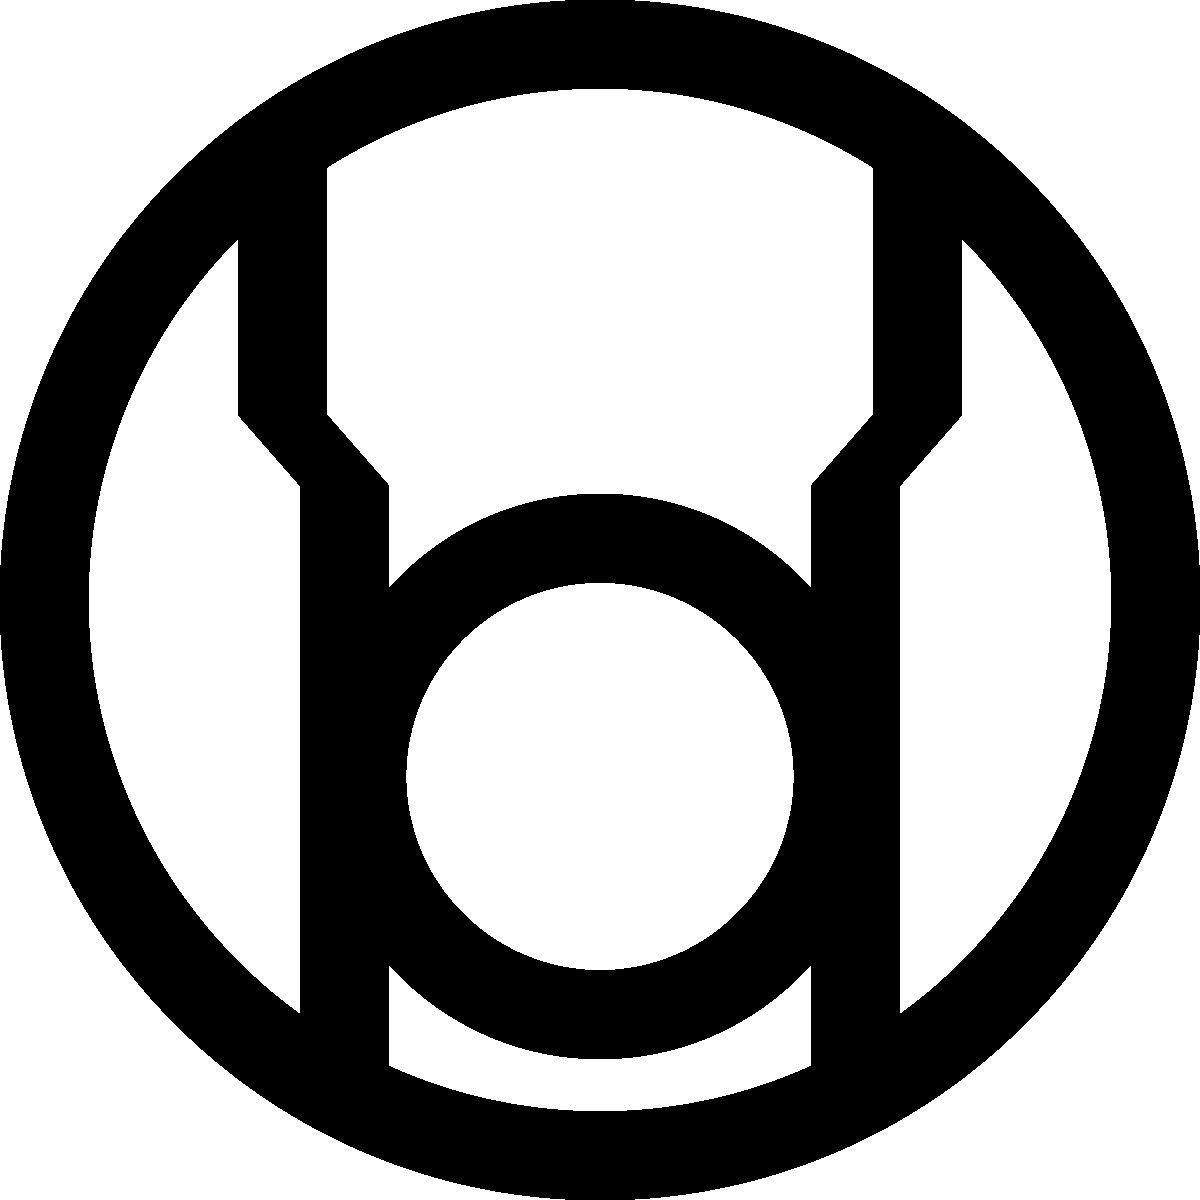 Black Lantern Logo - Black Lantern Corps Symbol Outline By Mr Droy D6155w6 Red D613gsx ...